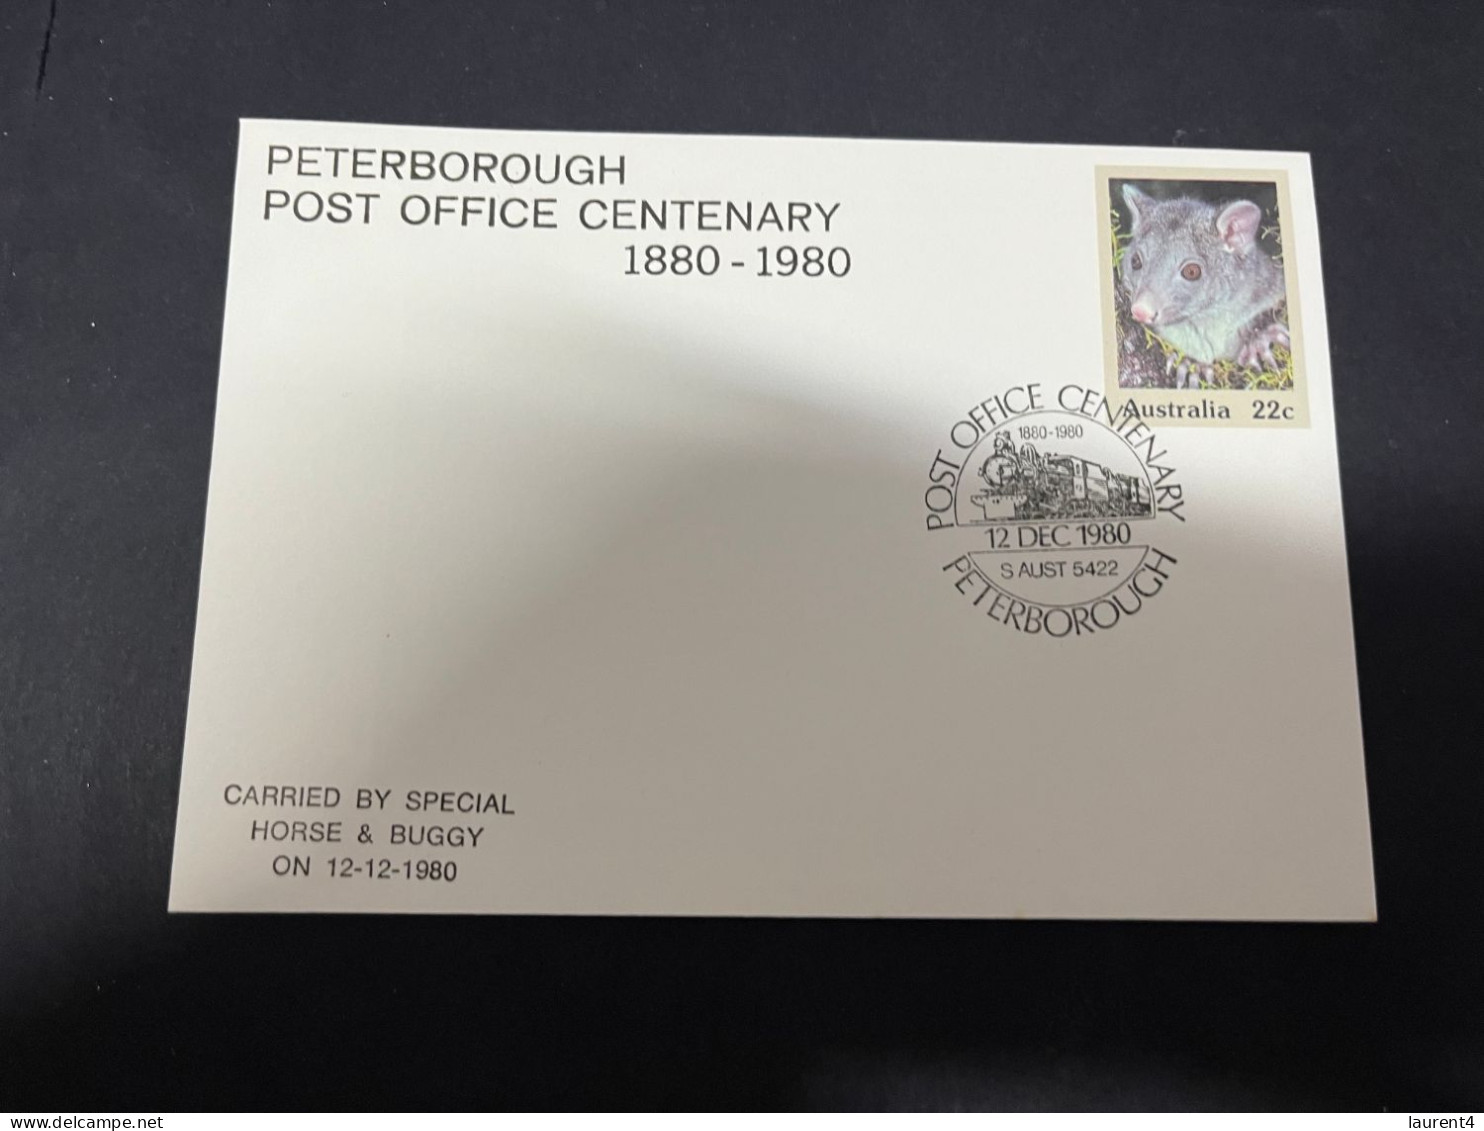 30-4-2023 (3 Z 29) Australia FDC (1 Cover) 1980 - Peterborough Post Office Centenary (Brushtail Possum) - Premiers Jours (FDC)